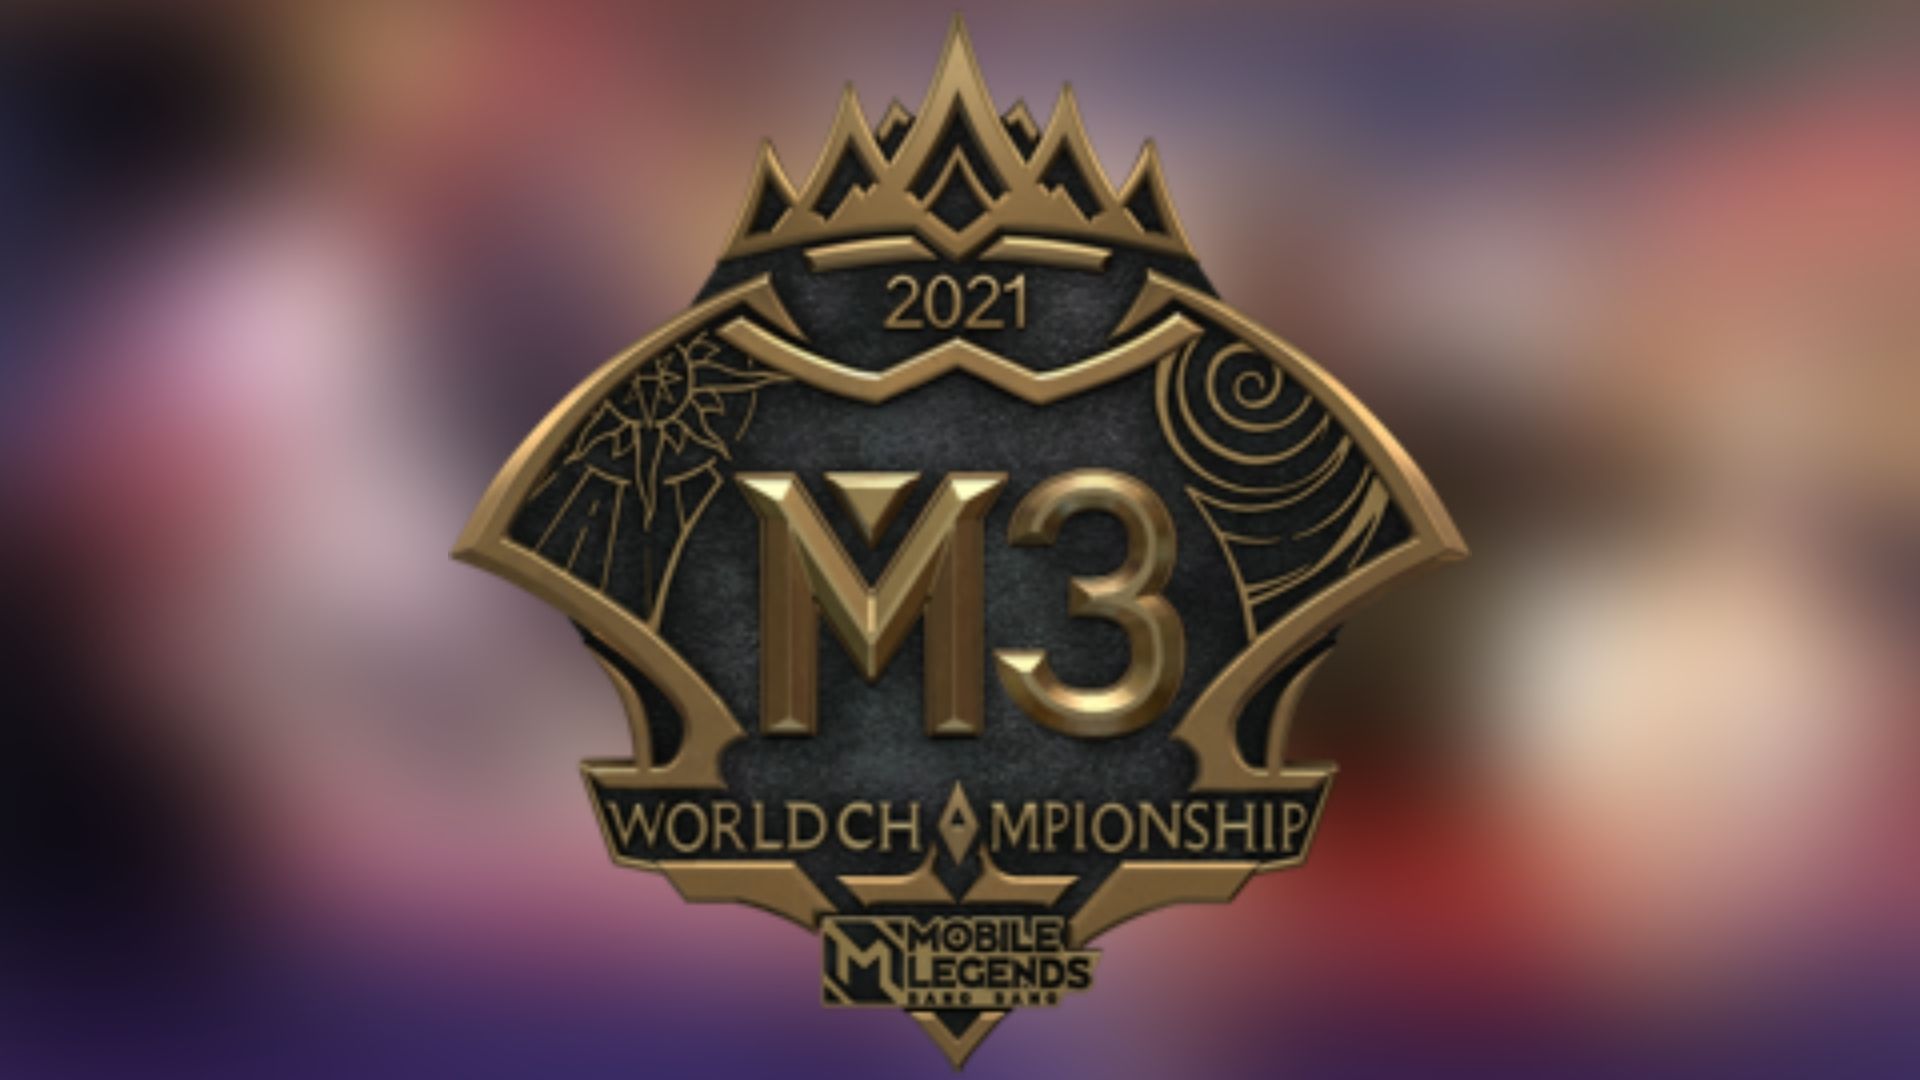 M3 world championship